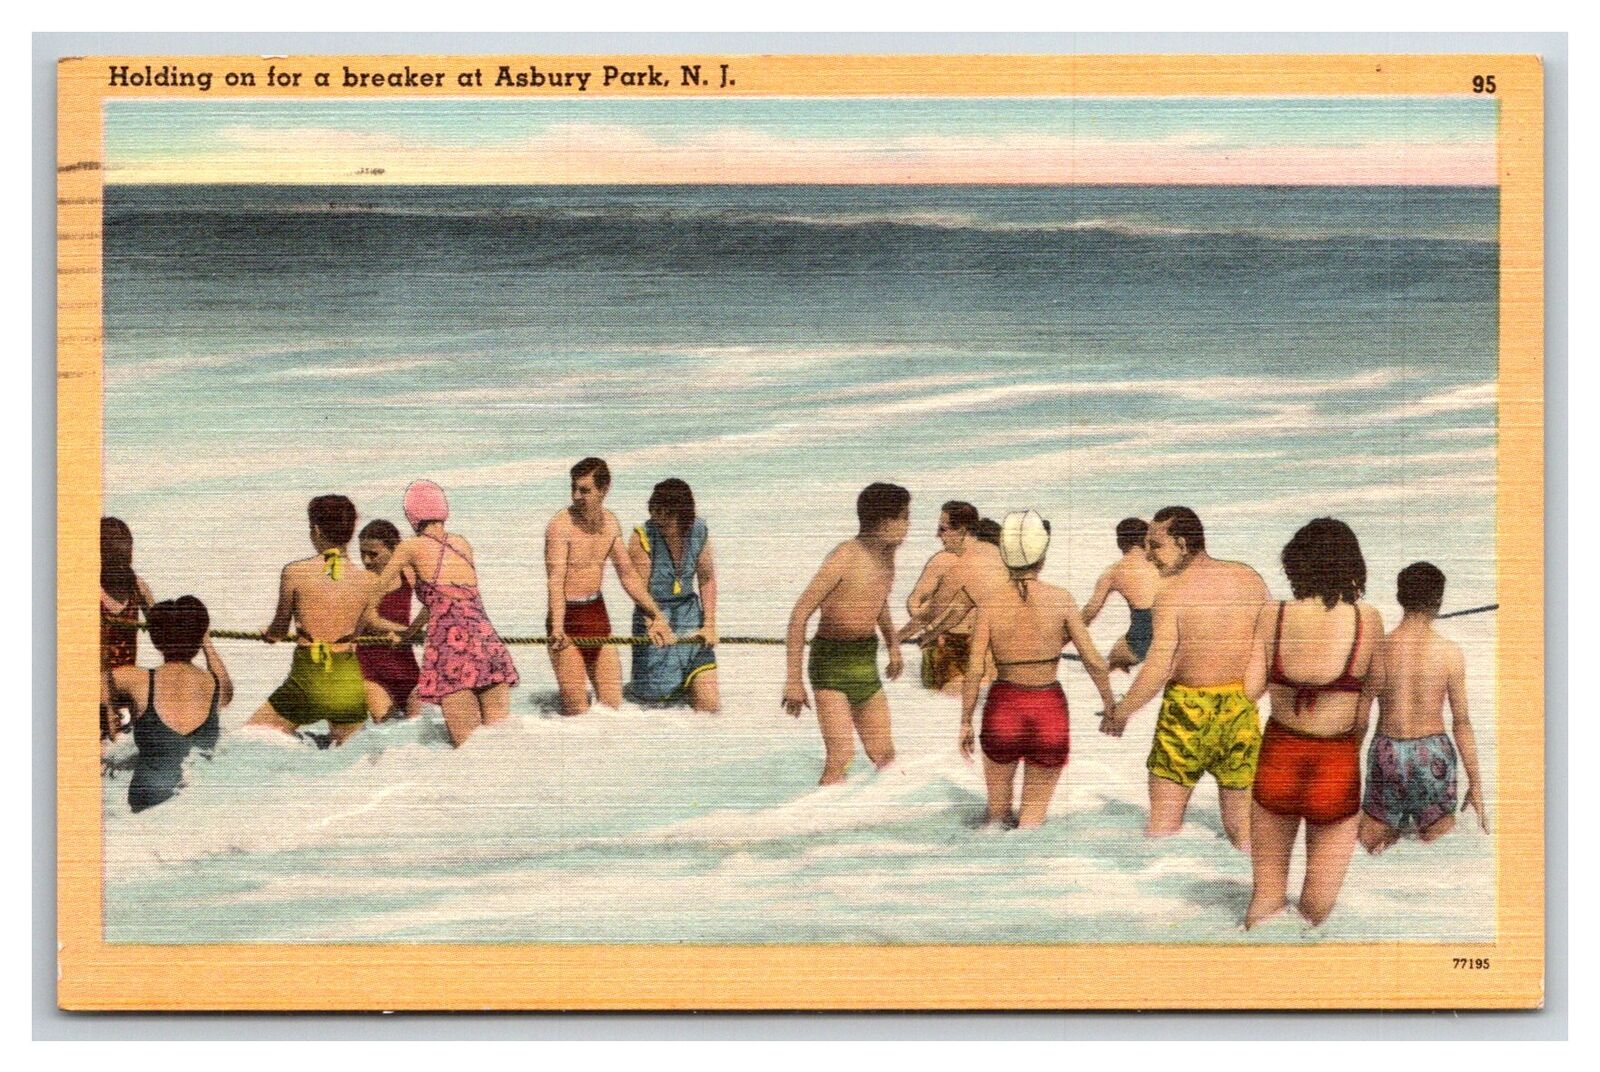 Bathers at Breaker Asbury Park, New Jersey bathers beach